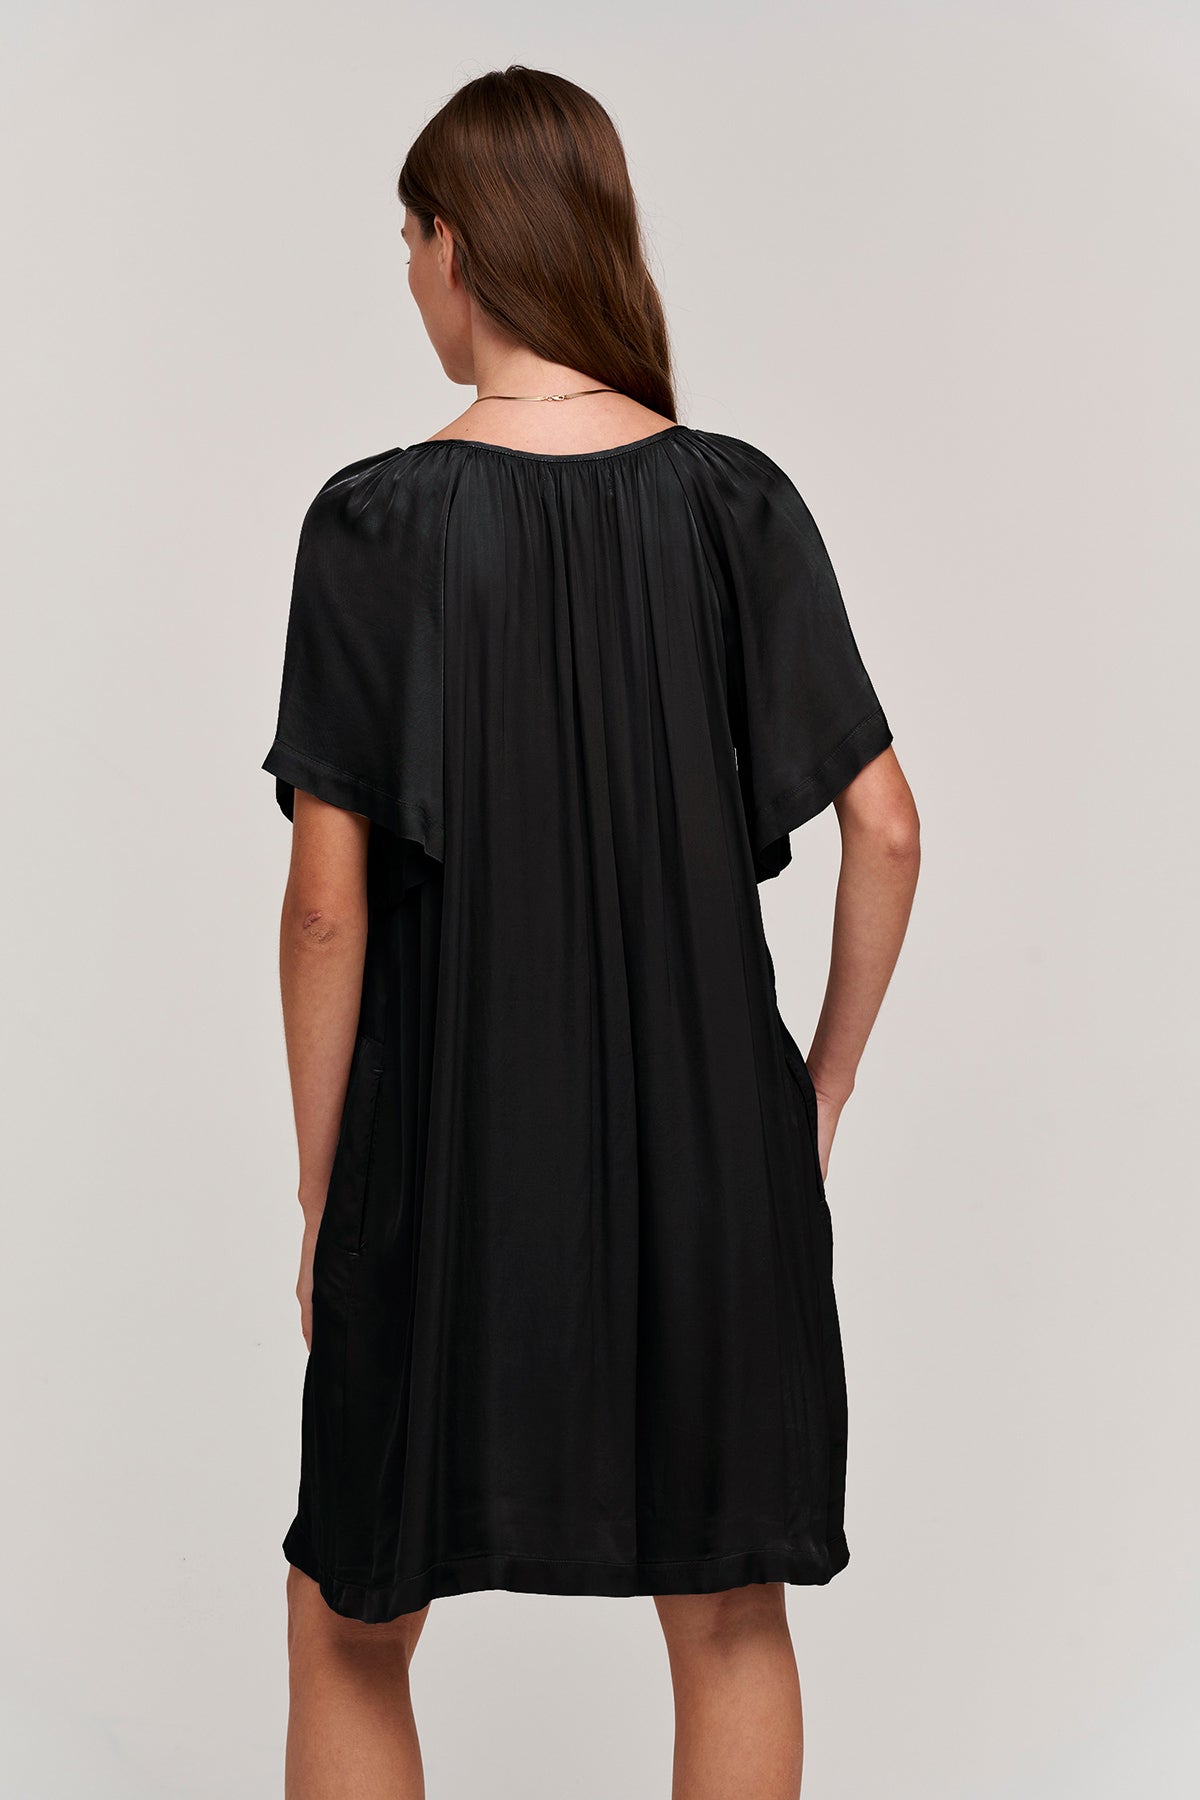 Suzanna satin viscose dress in black back.-24782595391681